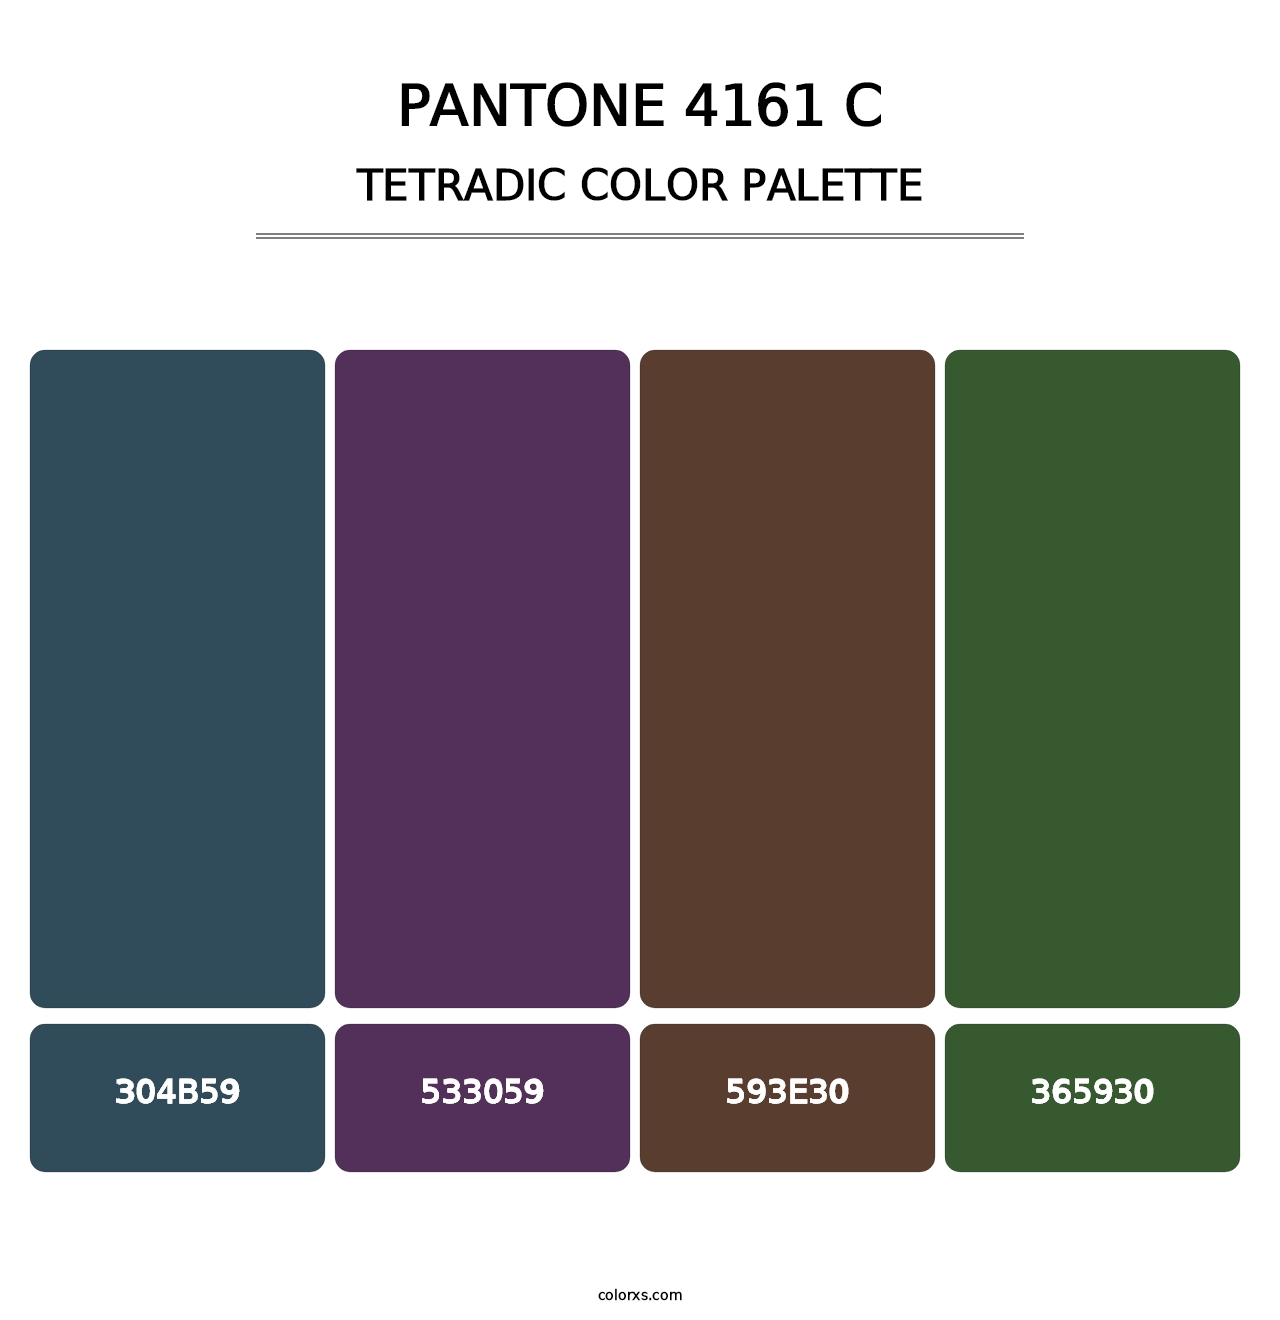 PANTONE 4161 C - Tetradic Color Palette